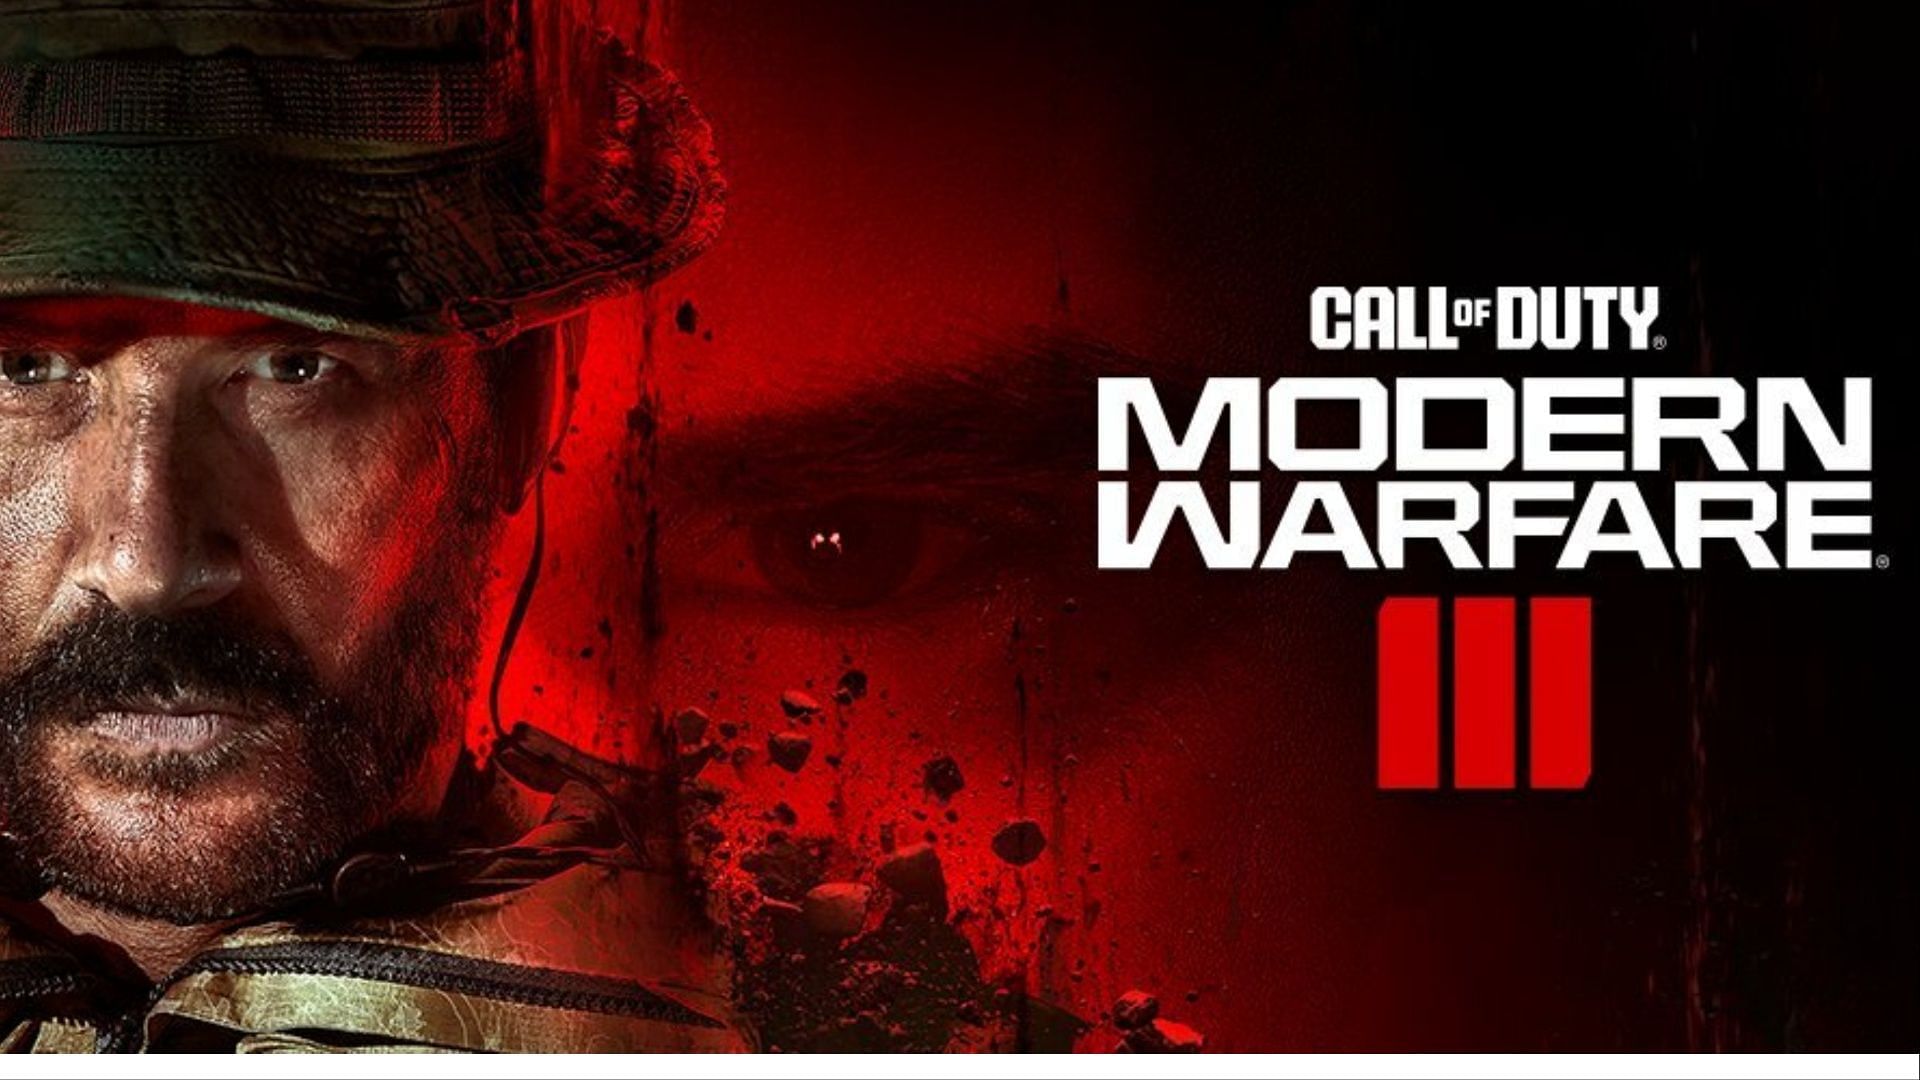 Call of Duty: Modern Warfare III Is Officially Live Worldwide